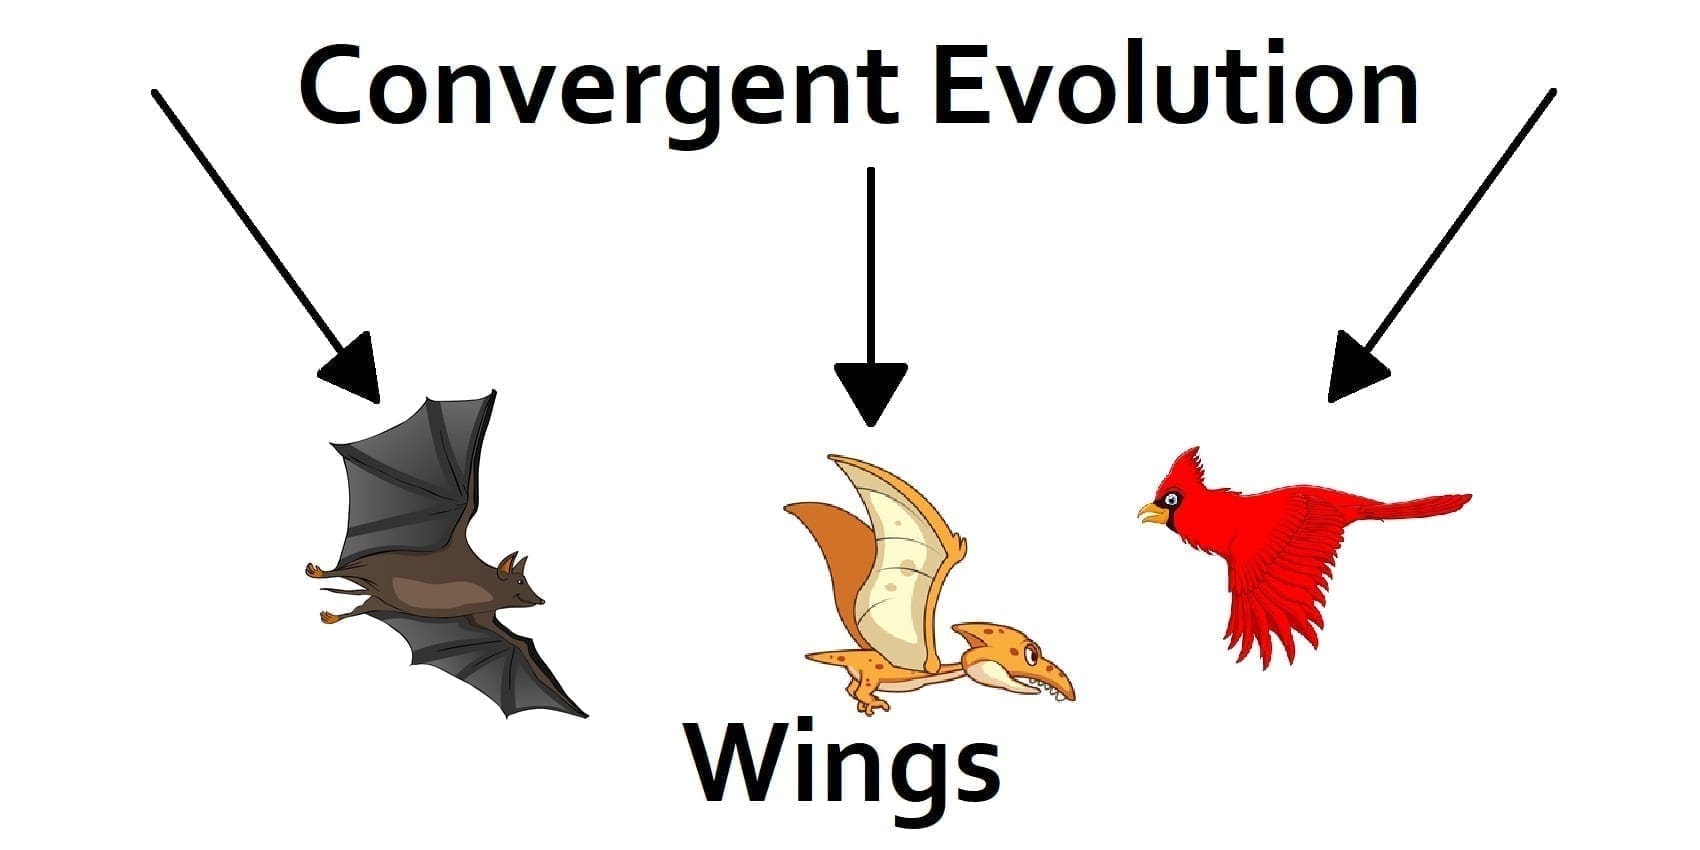 Convergent evolution diagram of flighted organisms